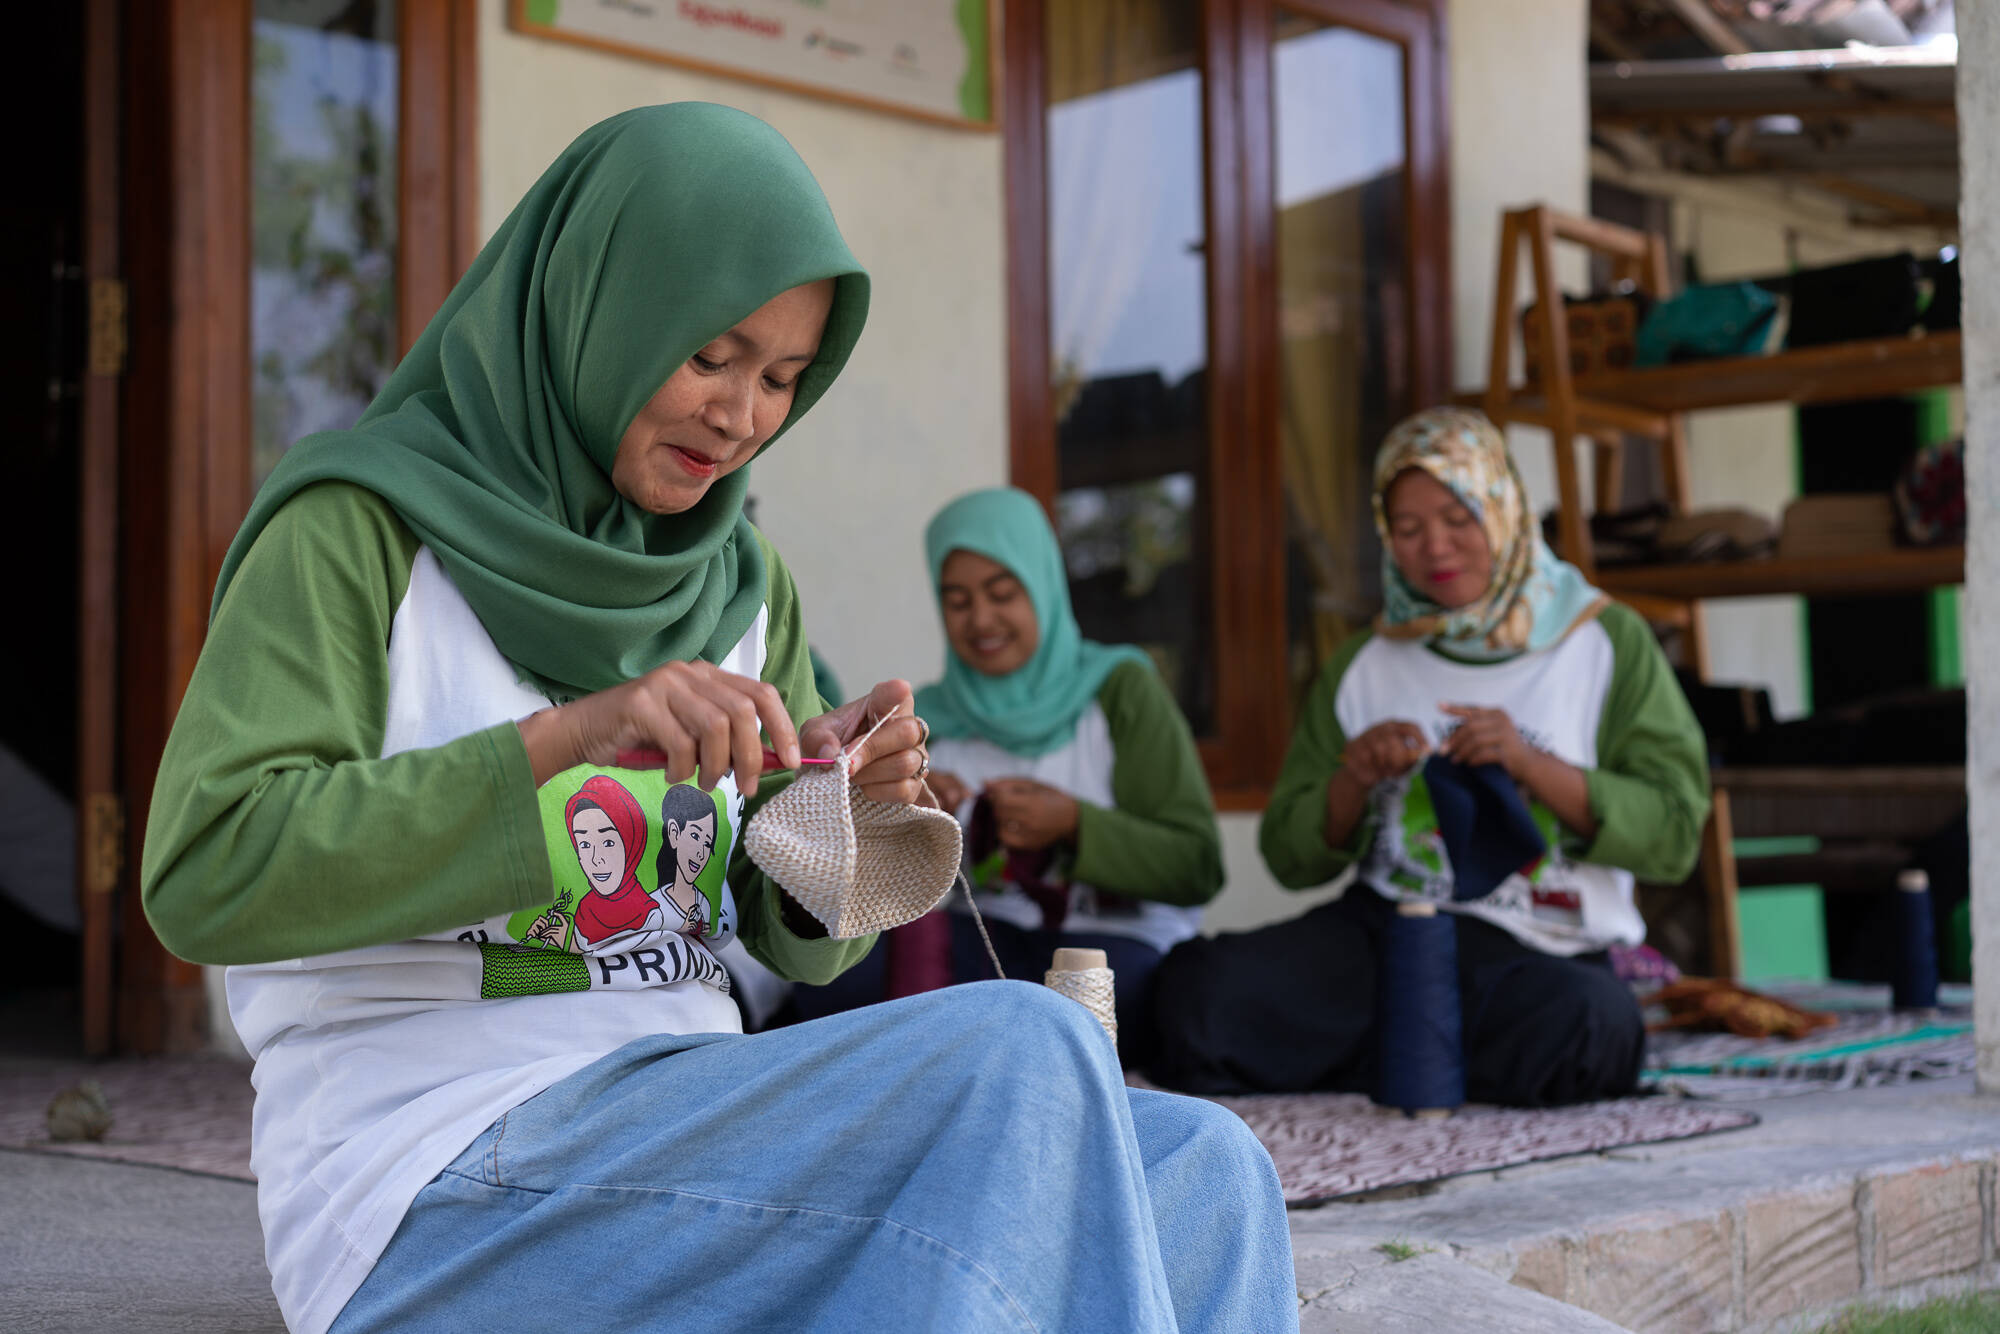 Hartini, perempuan asal Desa Pungpungan, Bojonegoro, Jawa Timur, telah bergabung dalam program Perempuan Indonesia Merajut) selama tiga tahun. Beragam pelatihan yang dipelajarinya menjadikannya piawai dalam membuat kerajinan rajut. Bahkan, produk-produknya telah dibeli oleh sebuah perusahaan dalam jumlah besar.